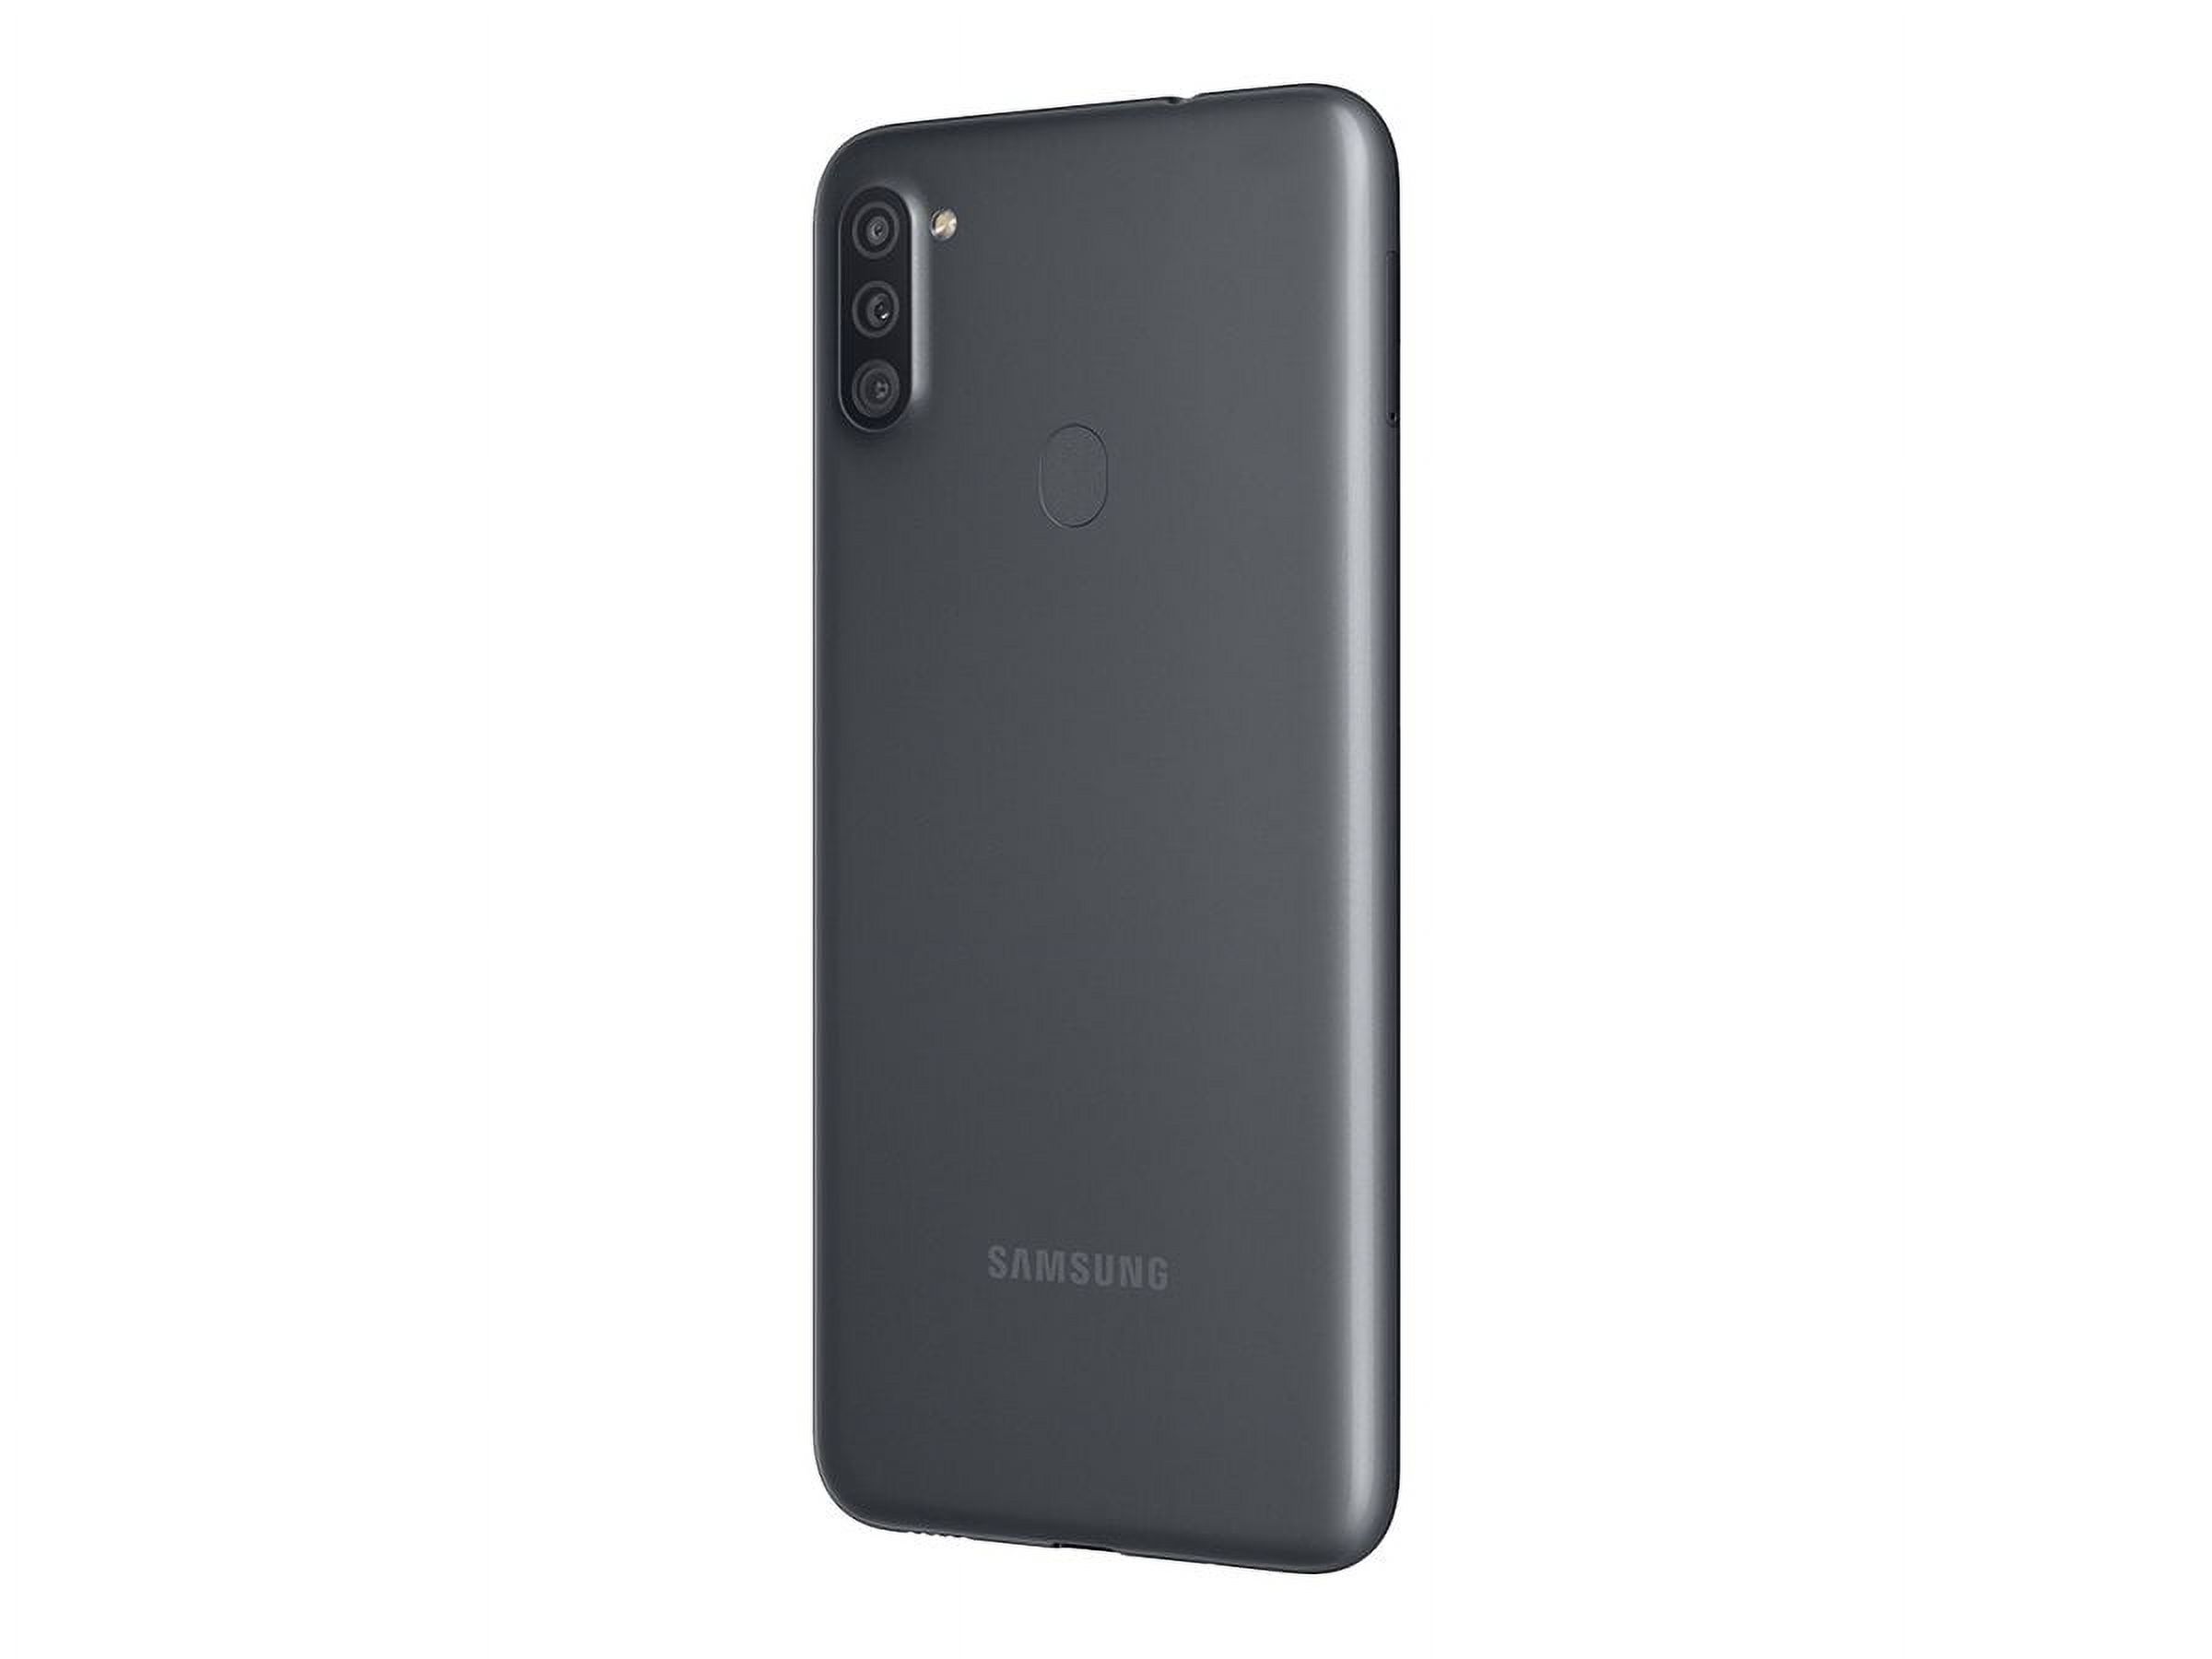 Samsung Galaxy A11 - Smartphone - 4G LTE - 32 GB - microSD slot - 6.4" - 1560 x 720 pixels - PLS TFT - RAM 2 GB (8 MP front camera) - 3x rear cameras - Android - Boost - black - image 4 of 6